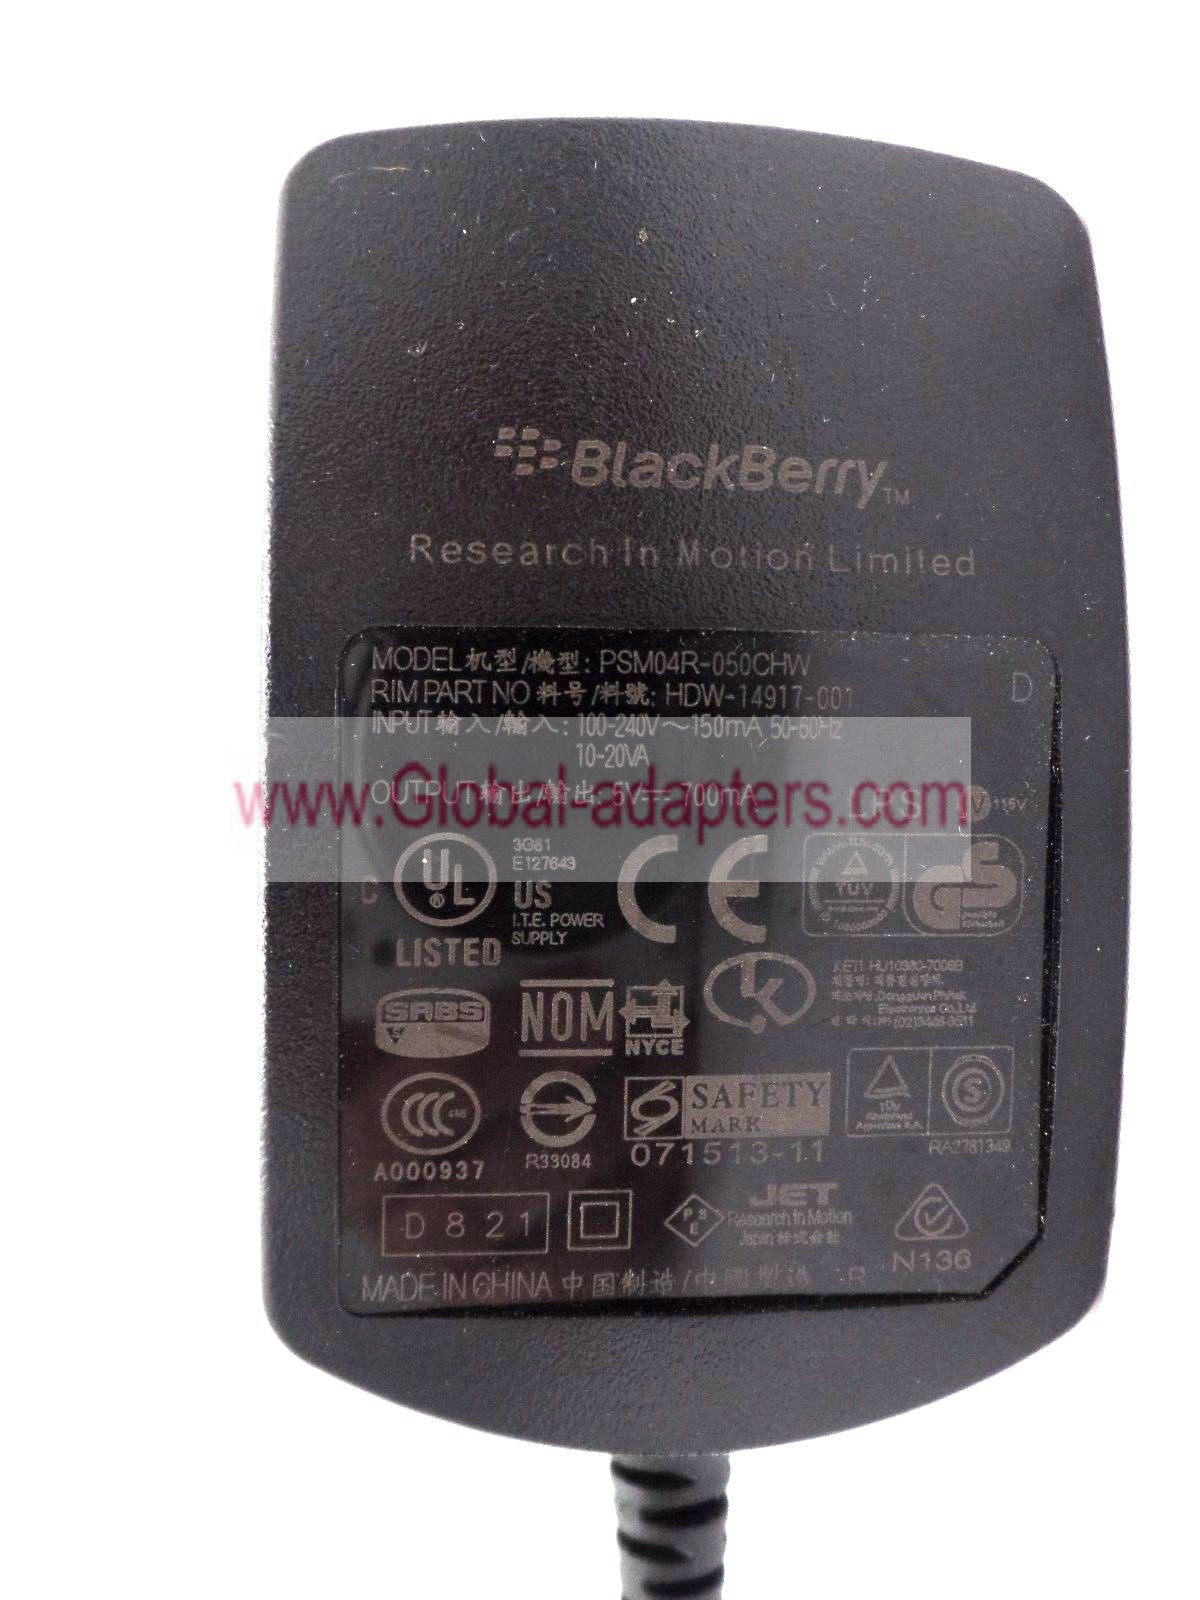 New BLACKBERRY PSM04R-050CHW 5V 700mA HDW-14917-001 AC/DC ADAPTER